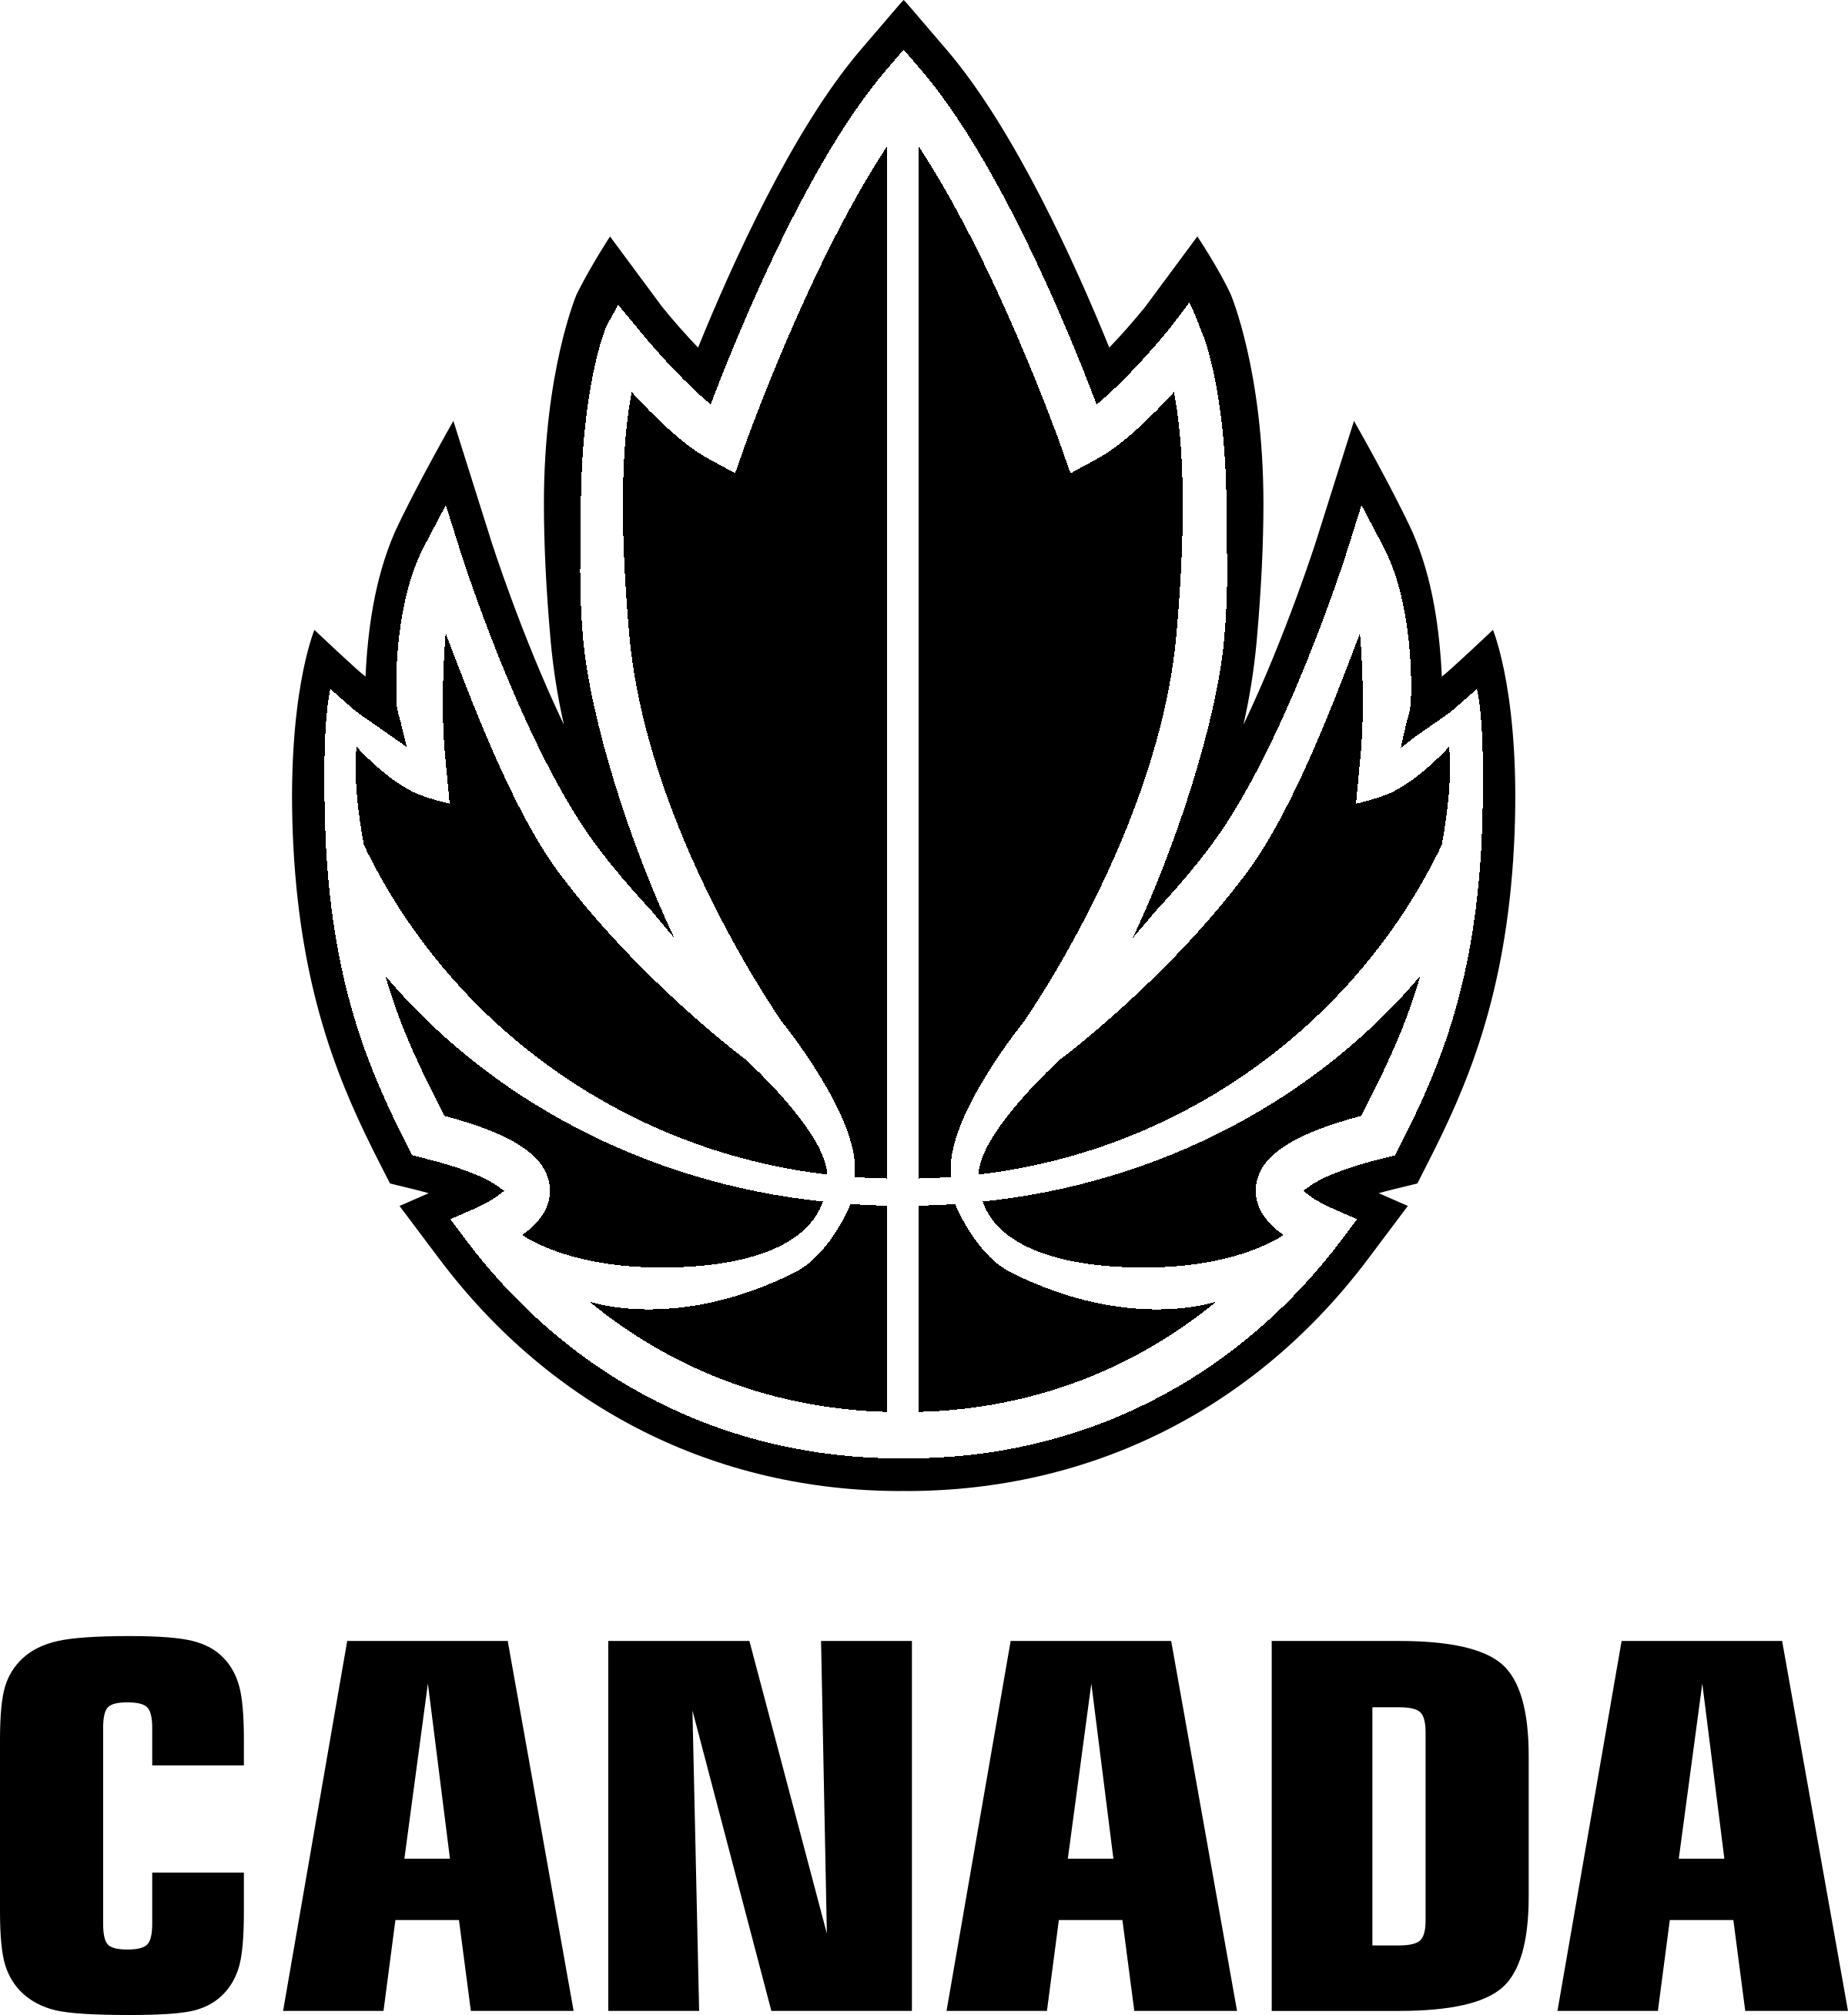 White Basketball Logo - Canadian Basketball Logo PNG Transparent & SVG Vector - Freebie Supply